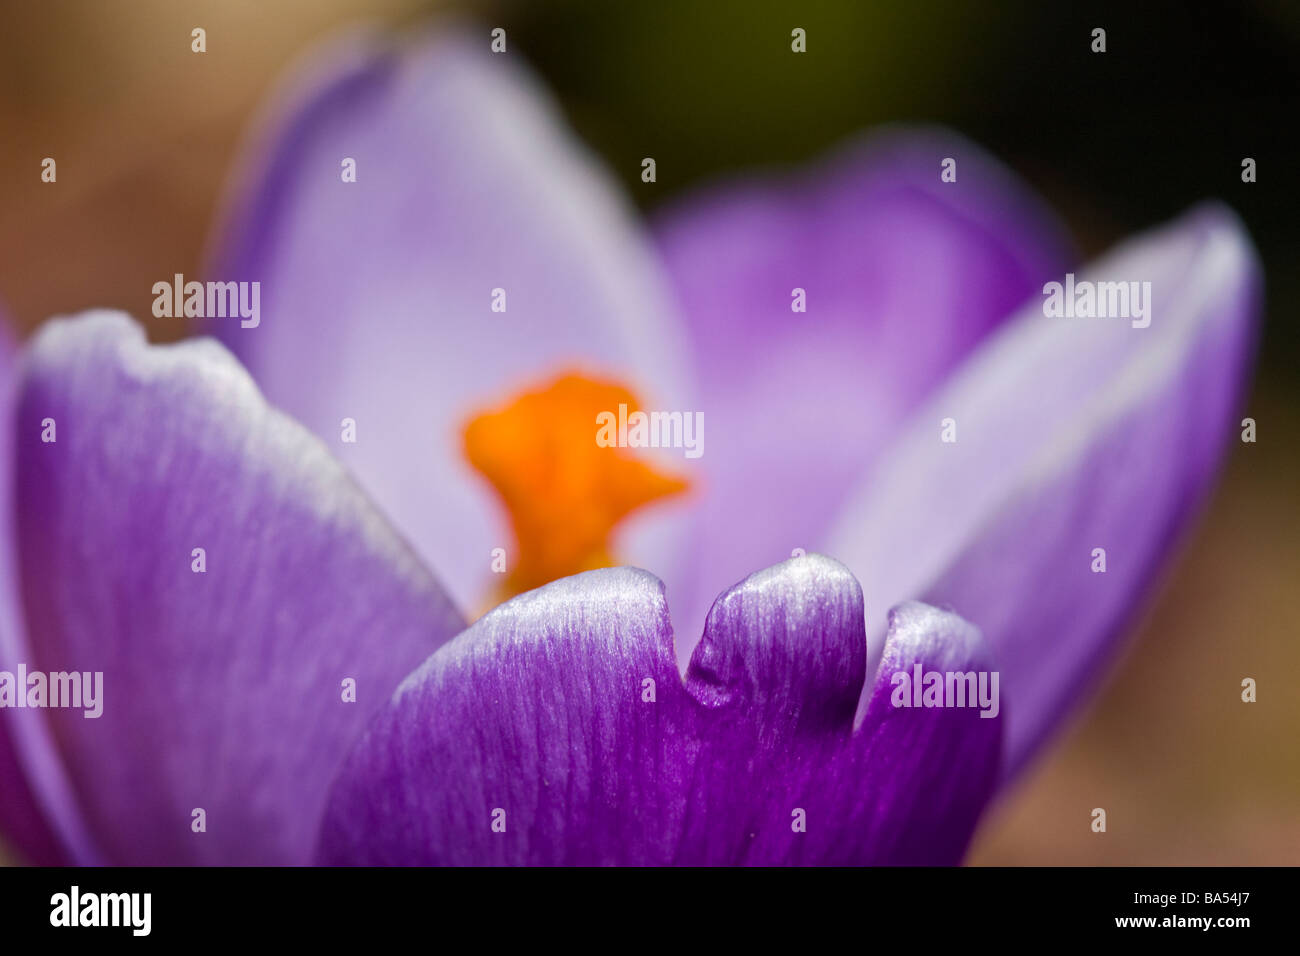 Macro image of a crocus flower Stock Photo